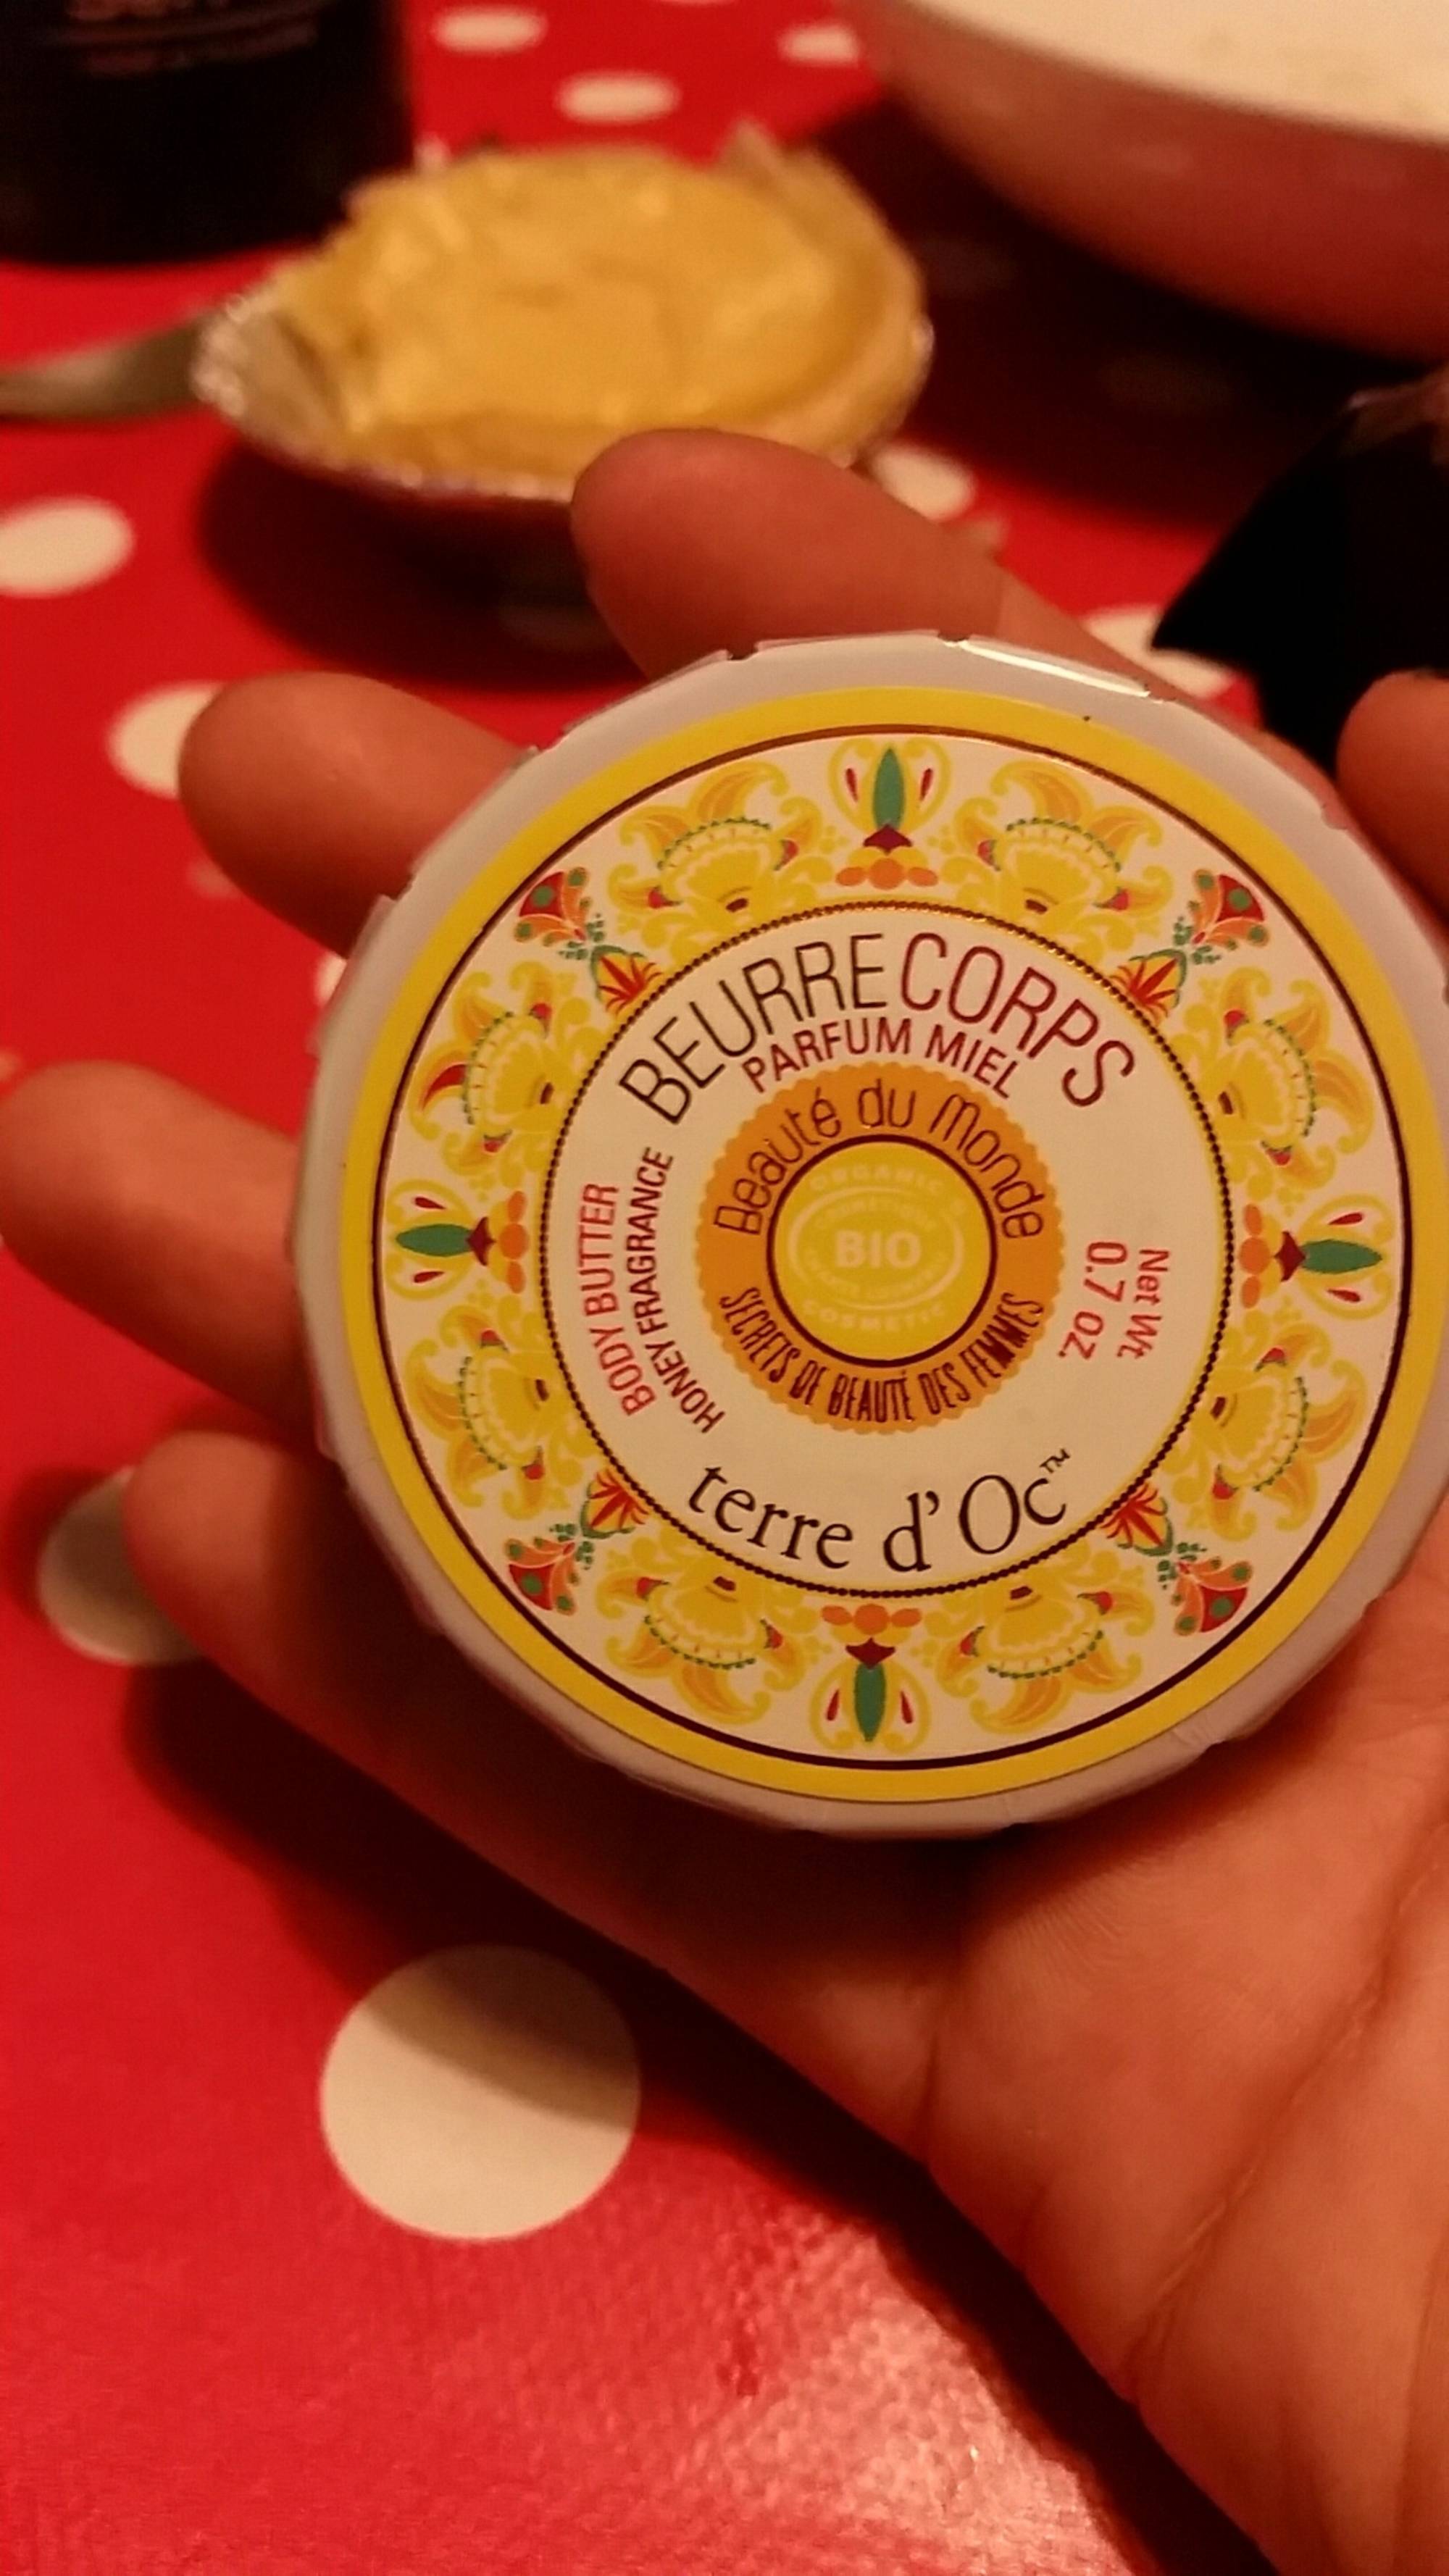 TERRE D'OC - Parfum miel - Beurre corps